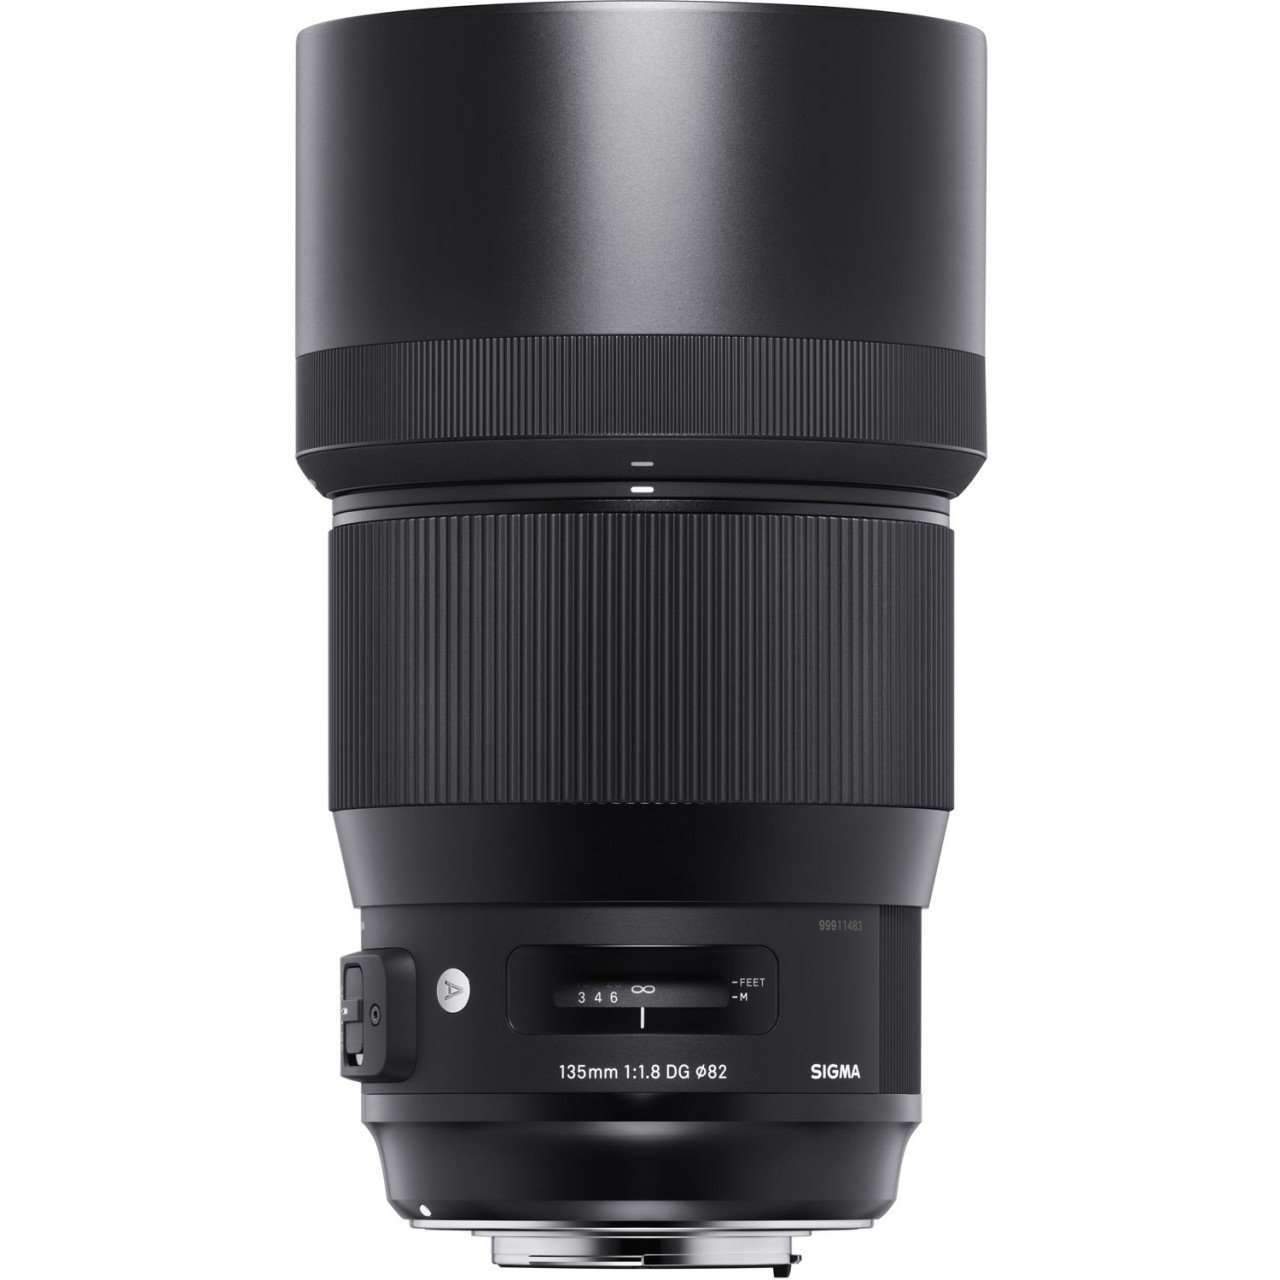 Sigma 135mm f/1.8 DG HSM Art Lens for Canon EF Sigma Lens - DSLR Fixed Focal Length